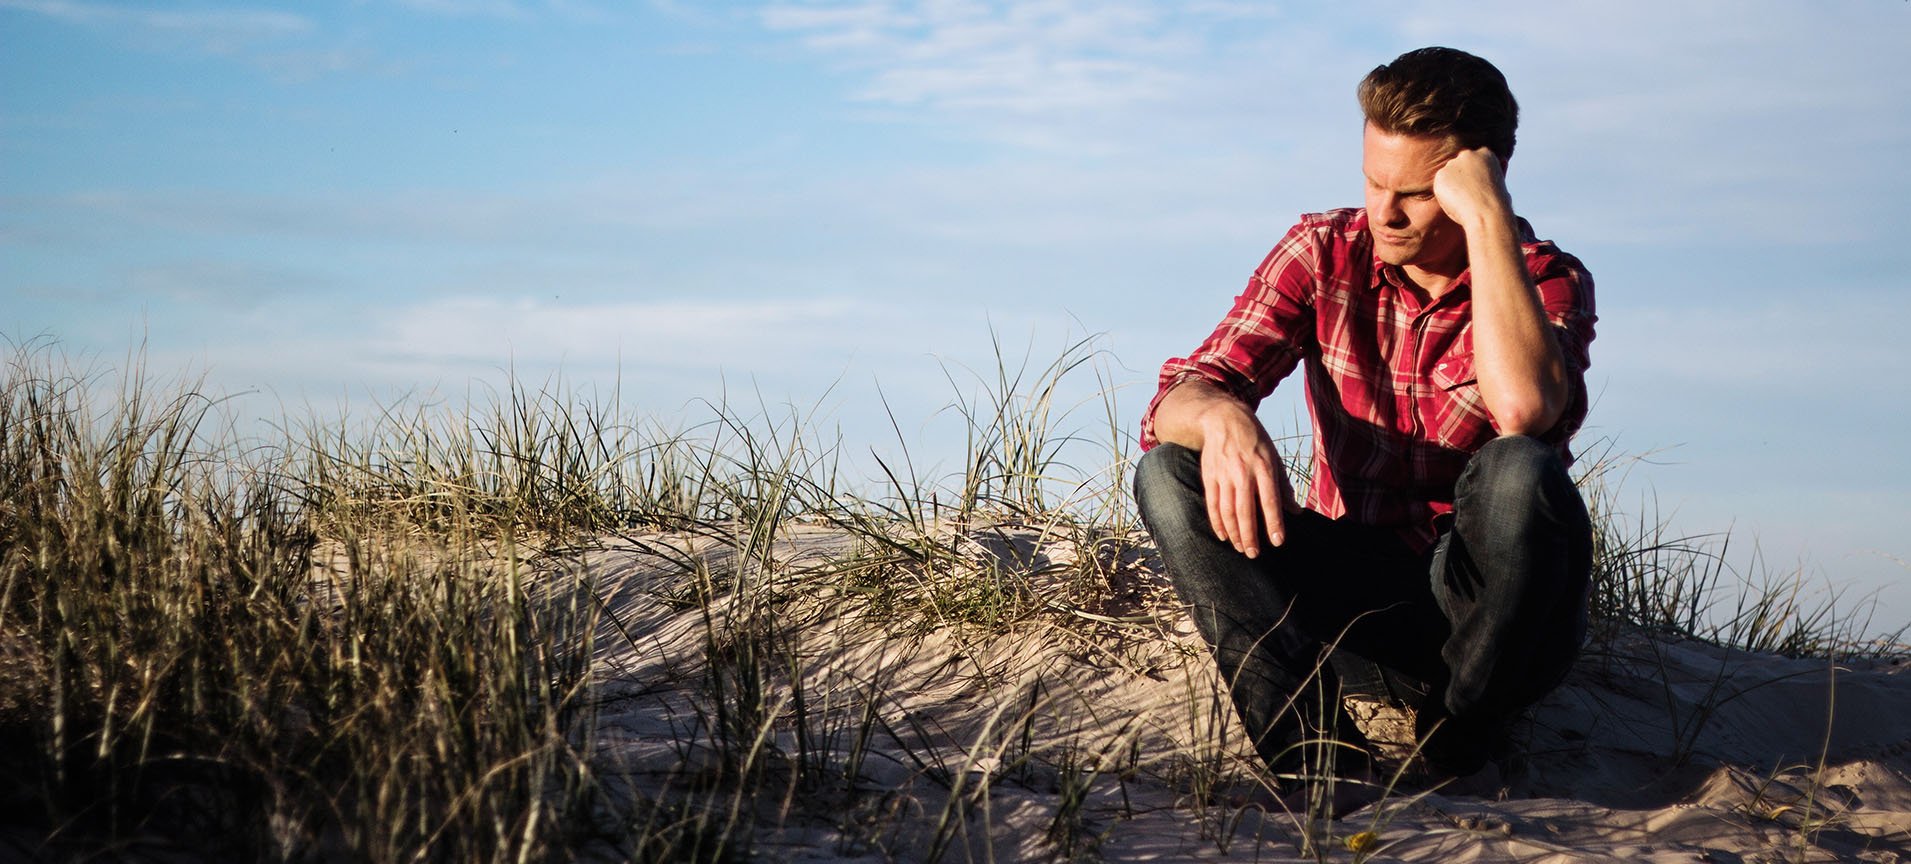 a sad man sitting on a beach dune